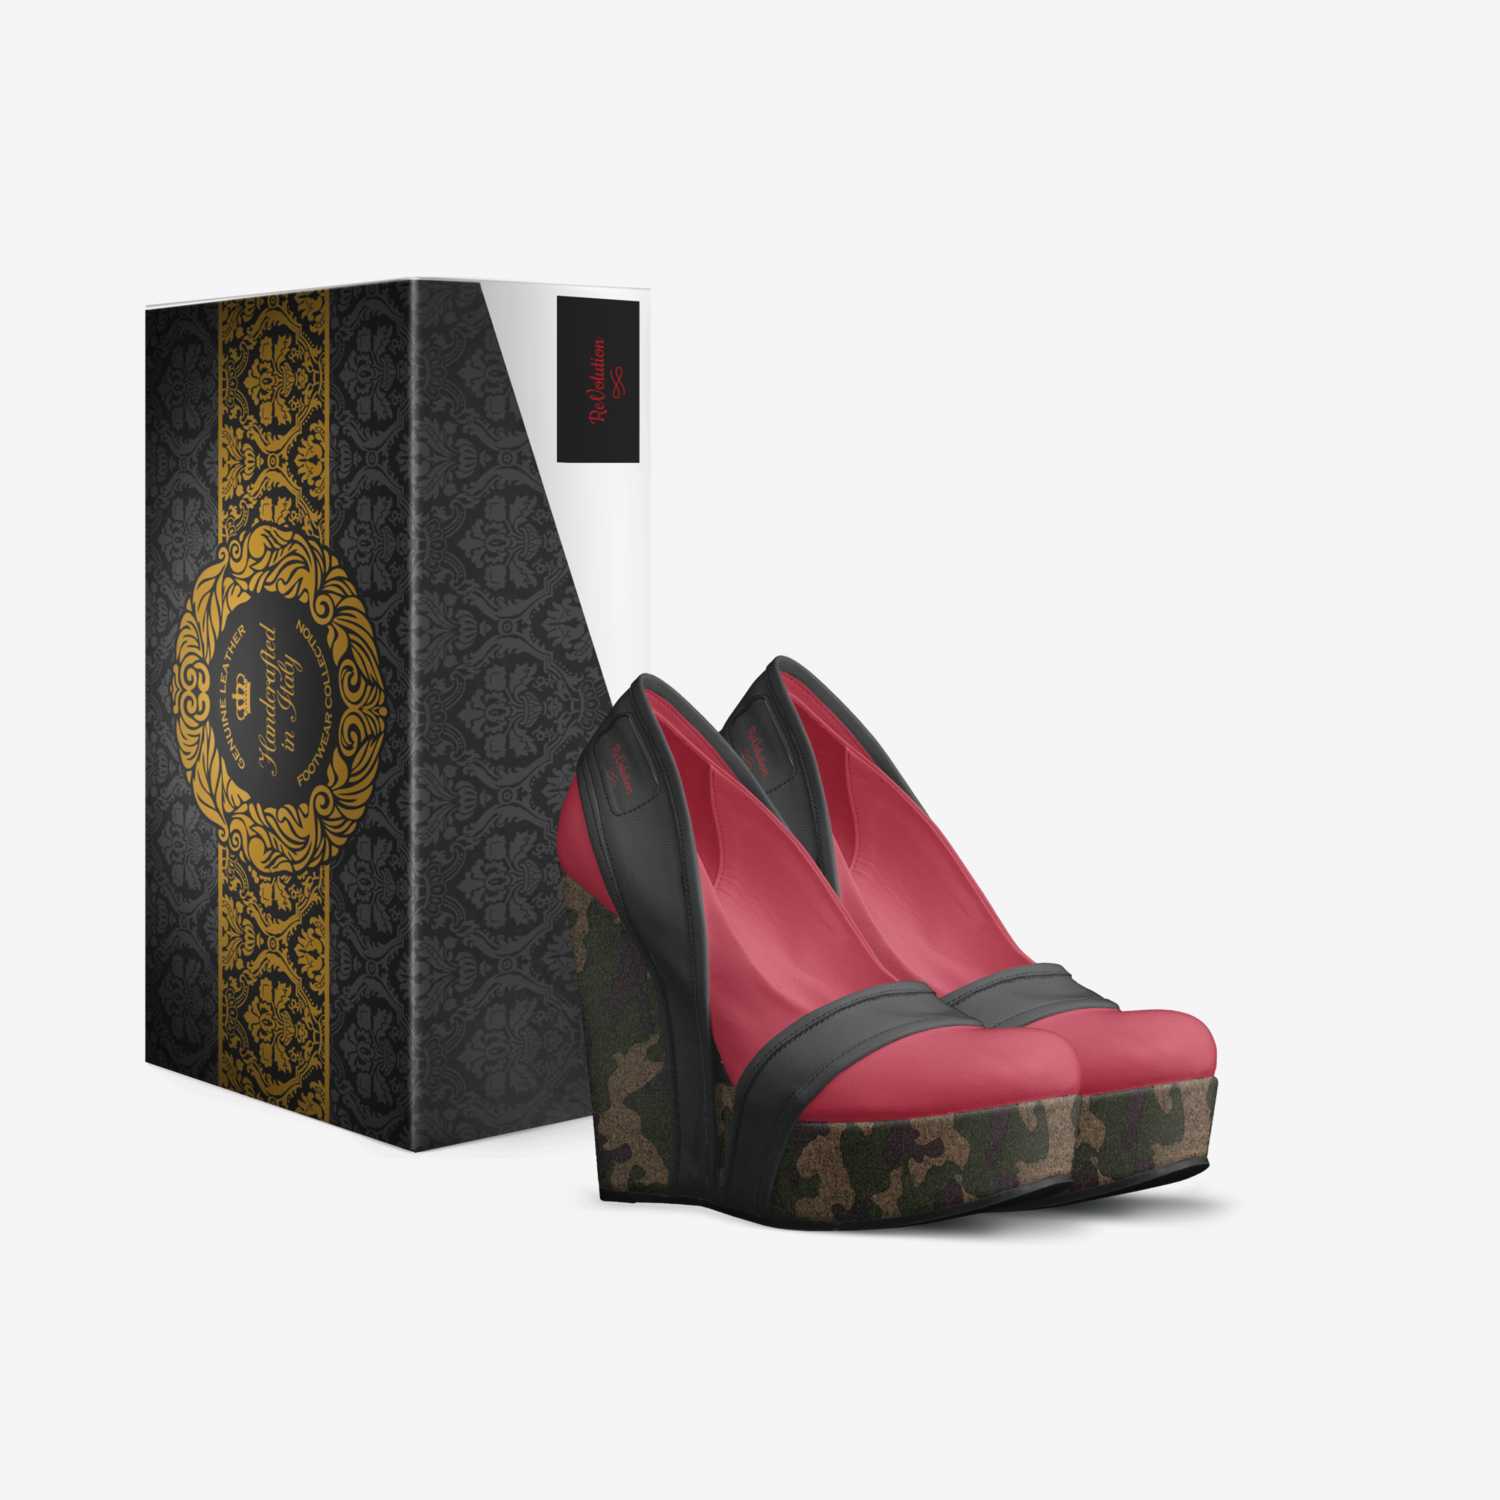 ReVolution custom made in Italy shoes by Tana Yasu | Box view